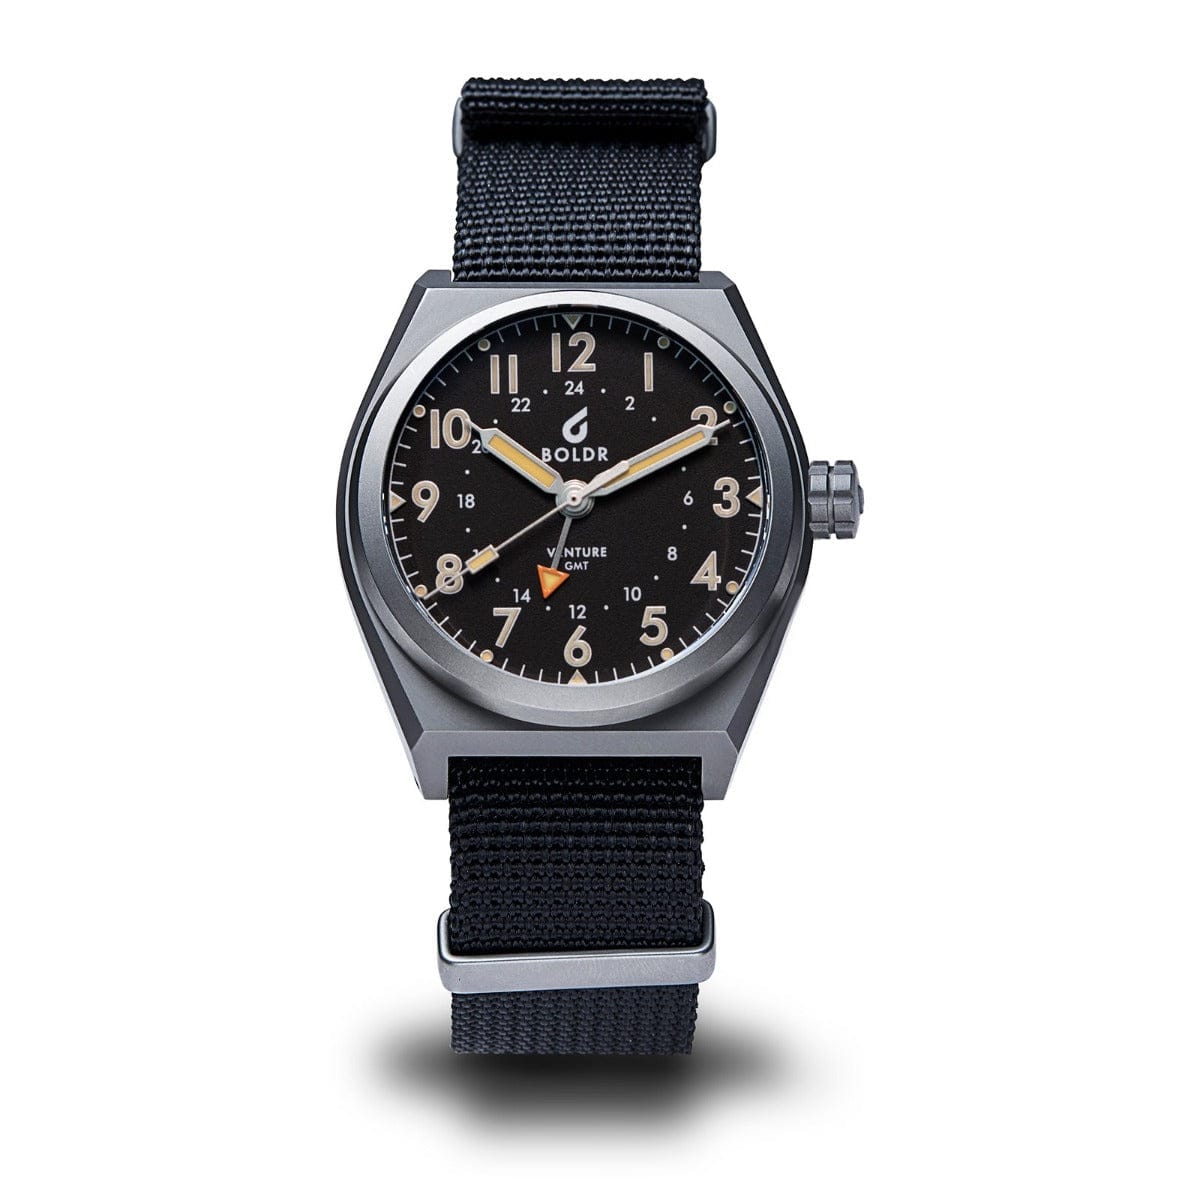 Boldr Venture GMT Field Watch - Black